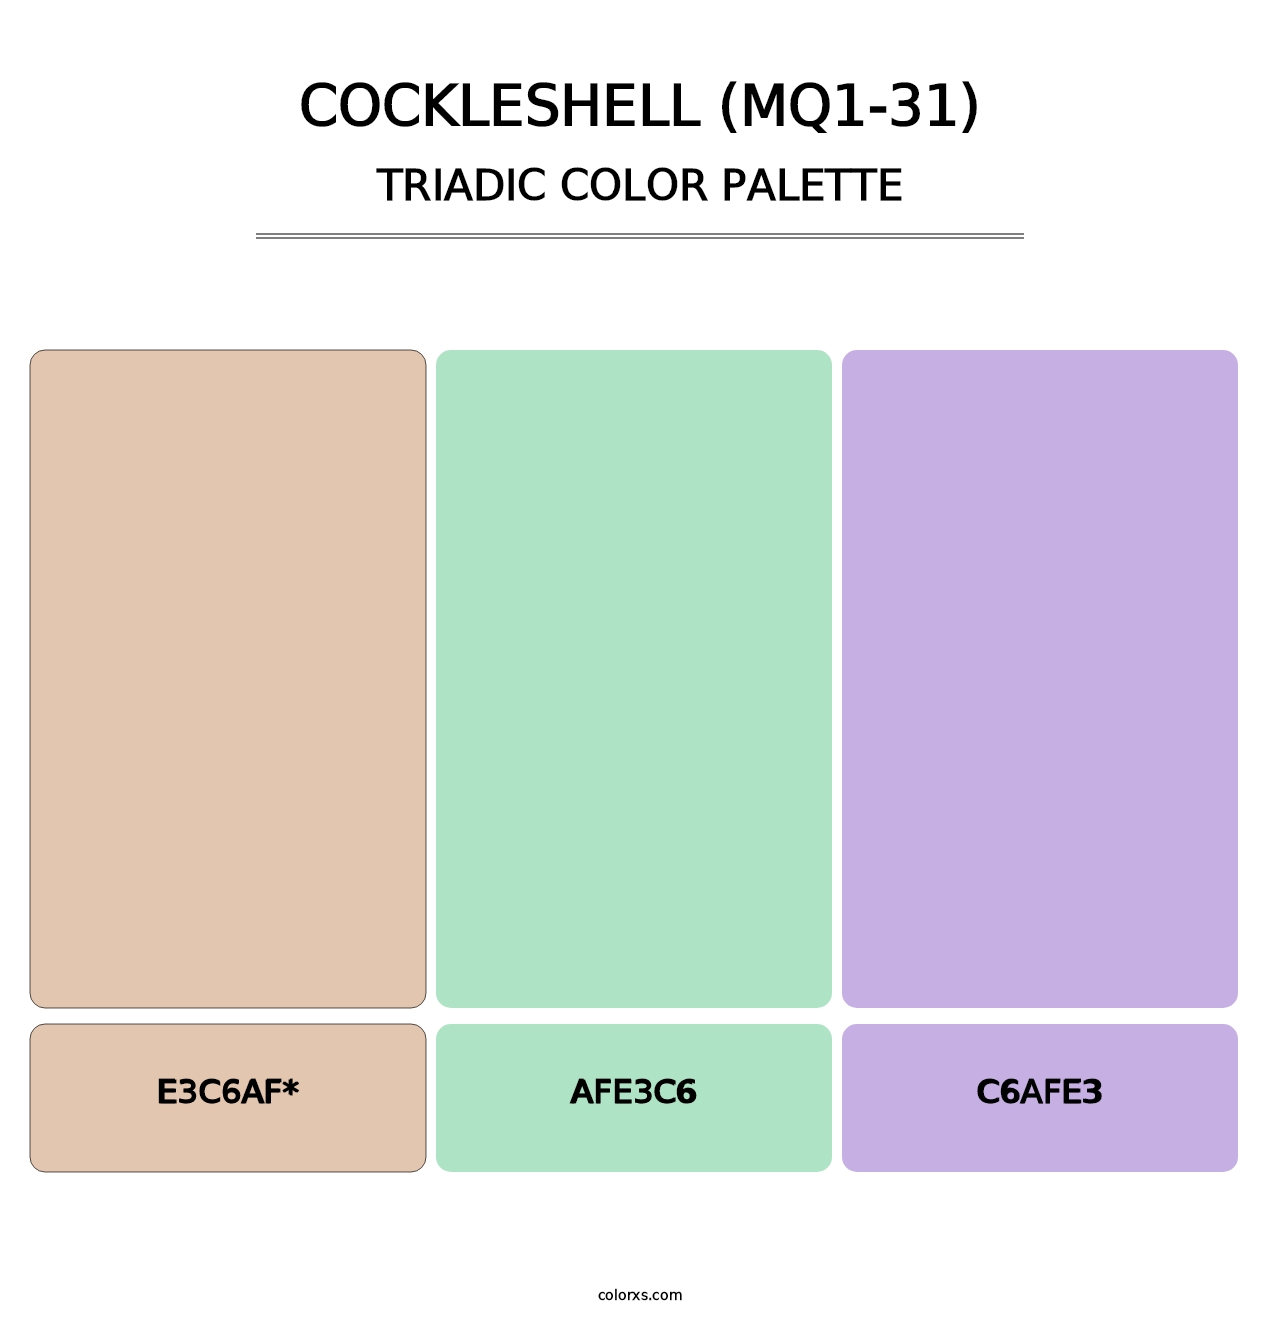 Cockleshell (MQ1-31) - Triadic Color Palette